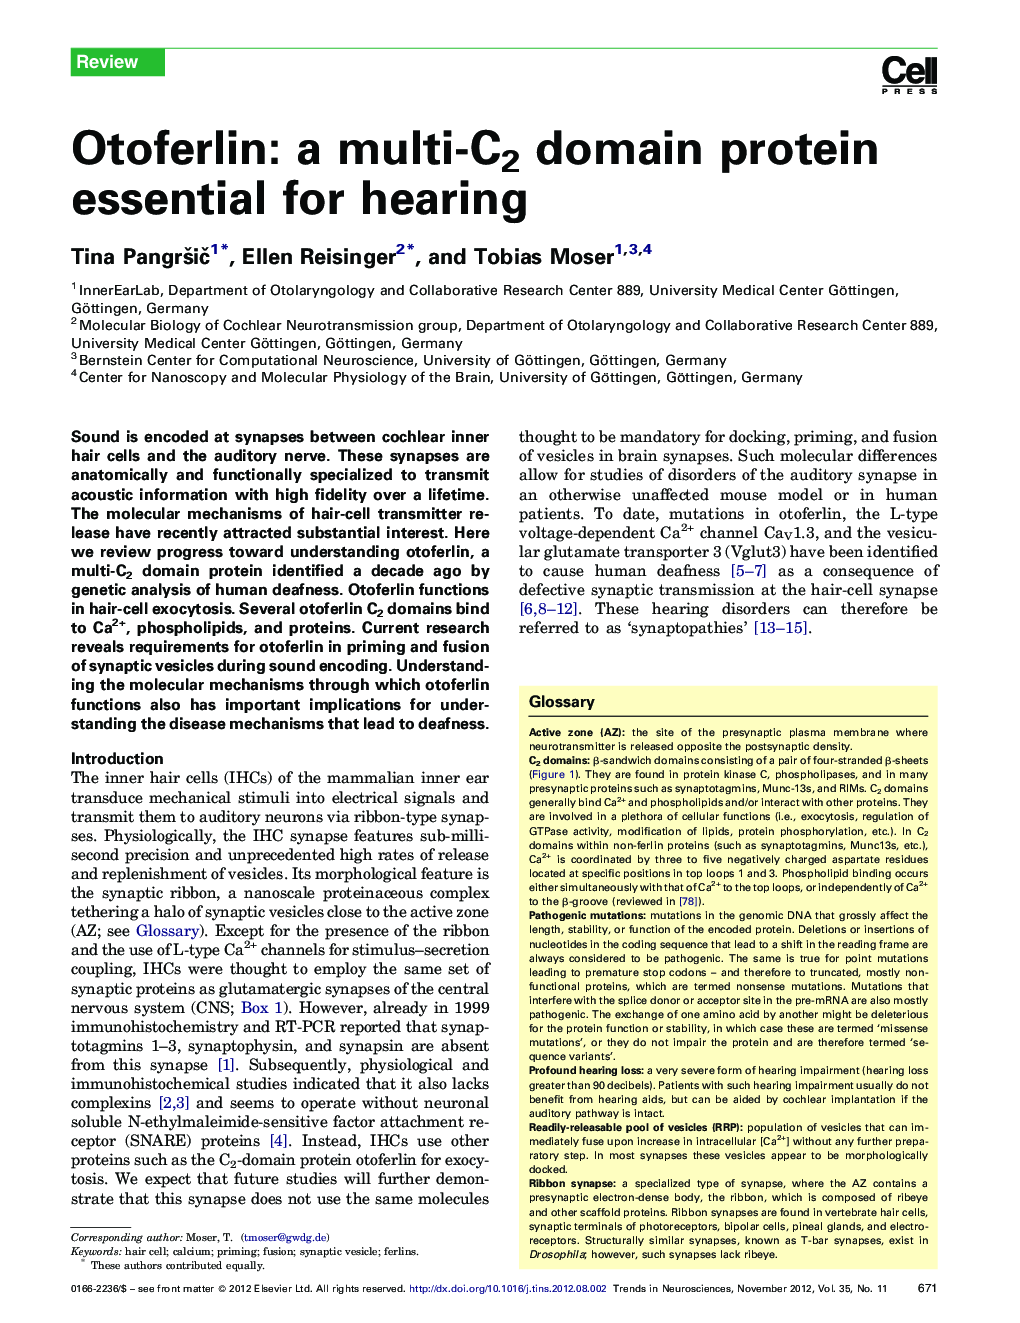 Otoferlin: a multi-C2 domain protein essential for hearing